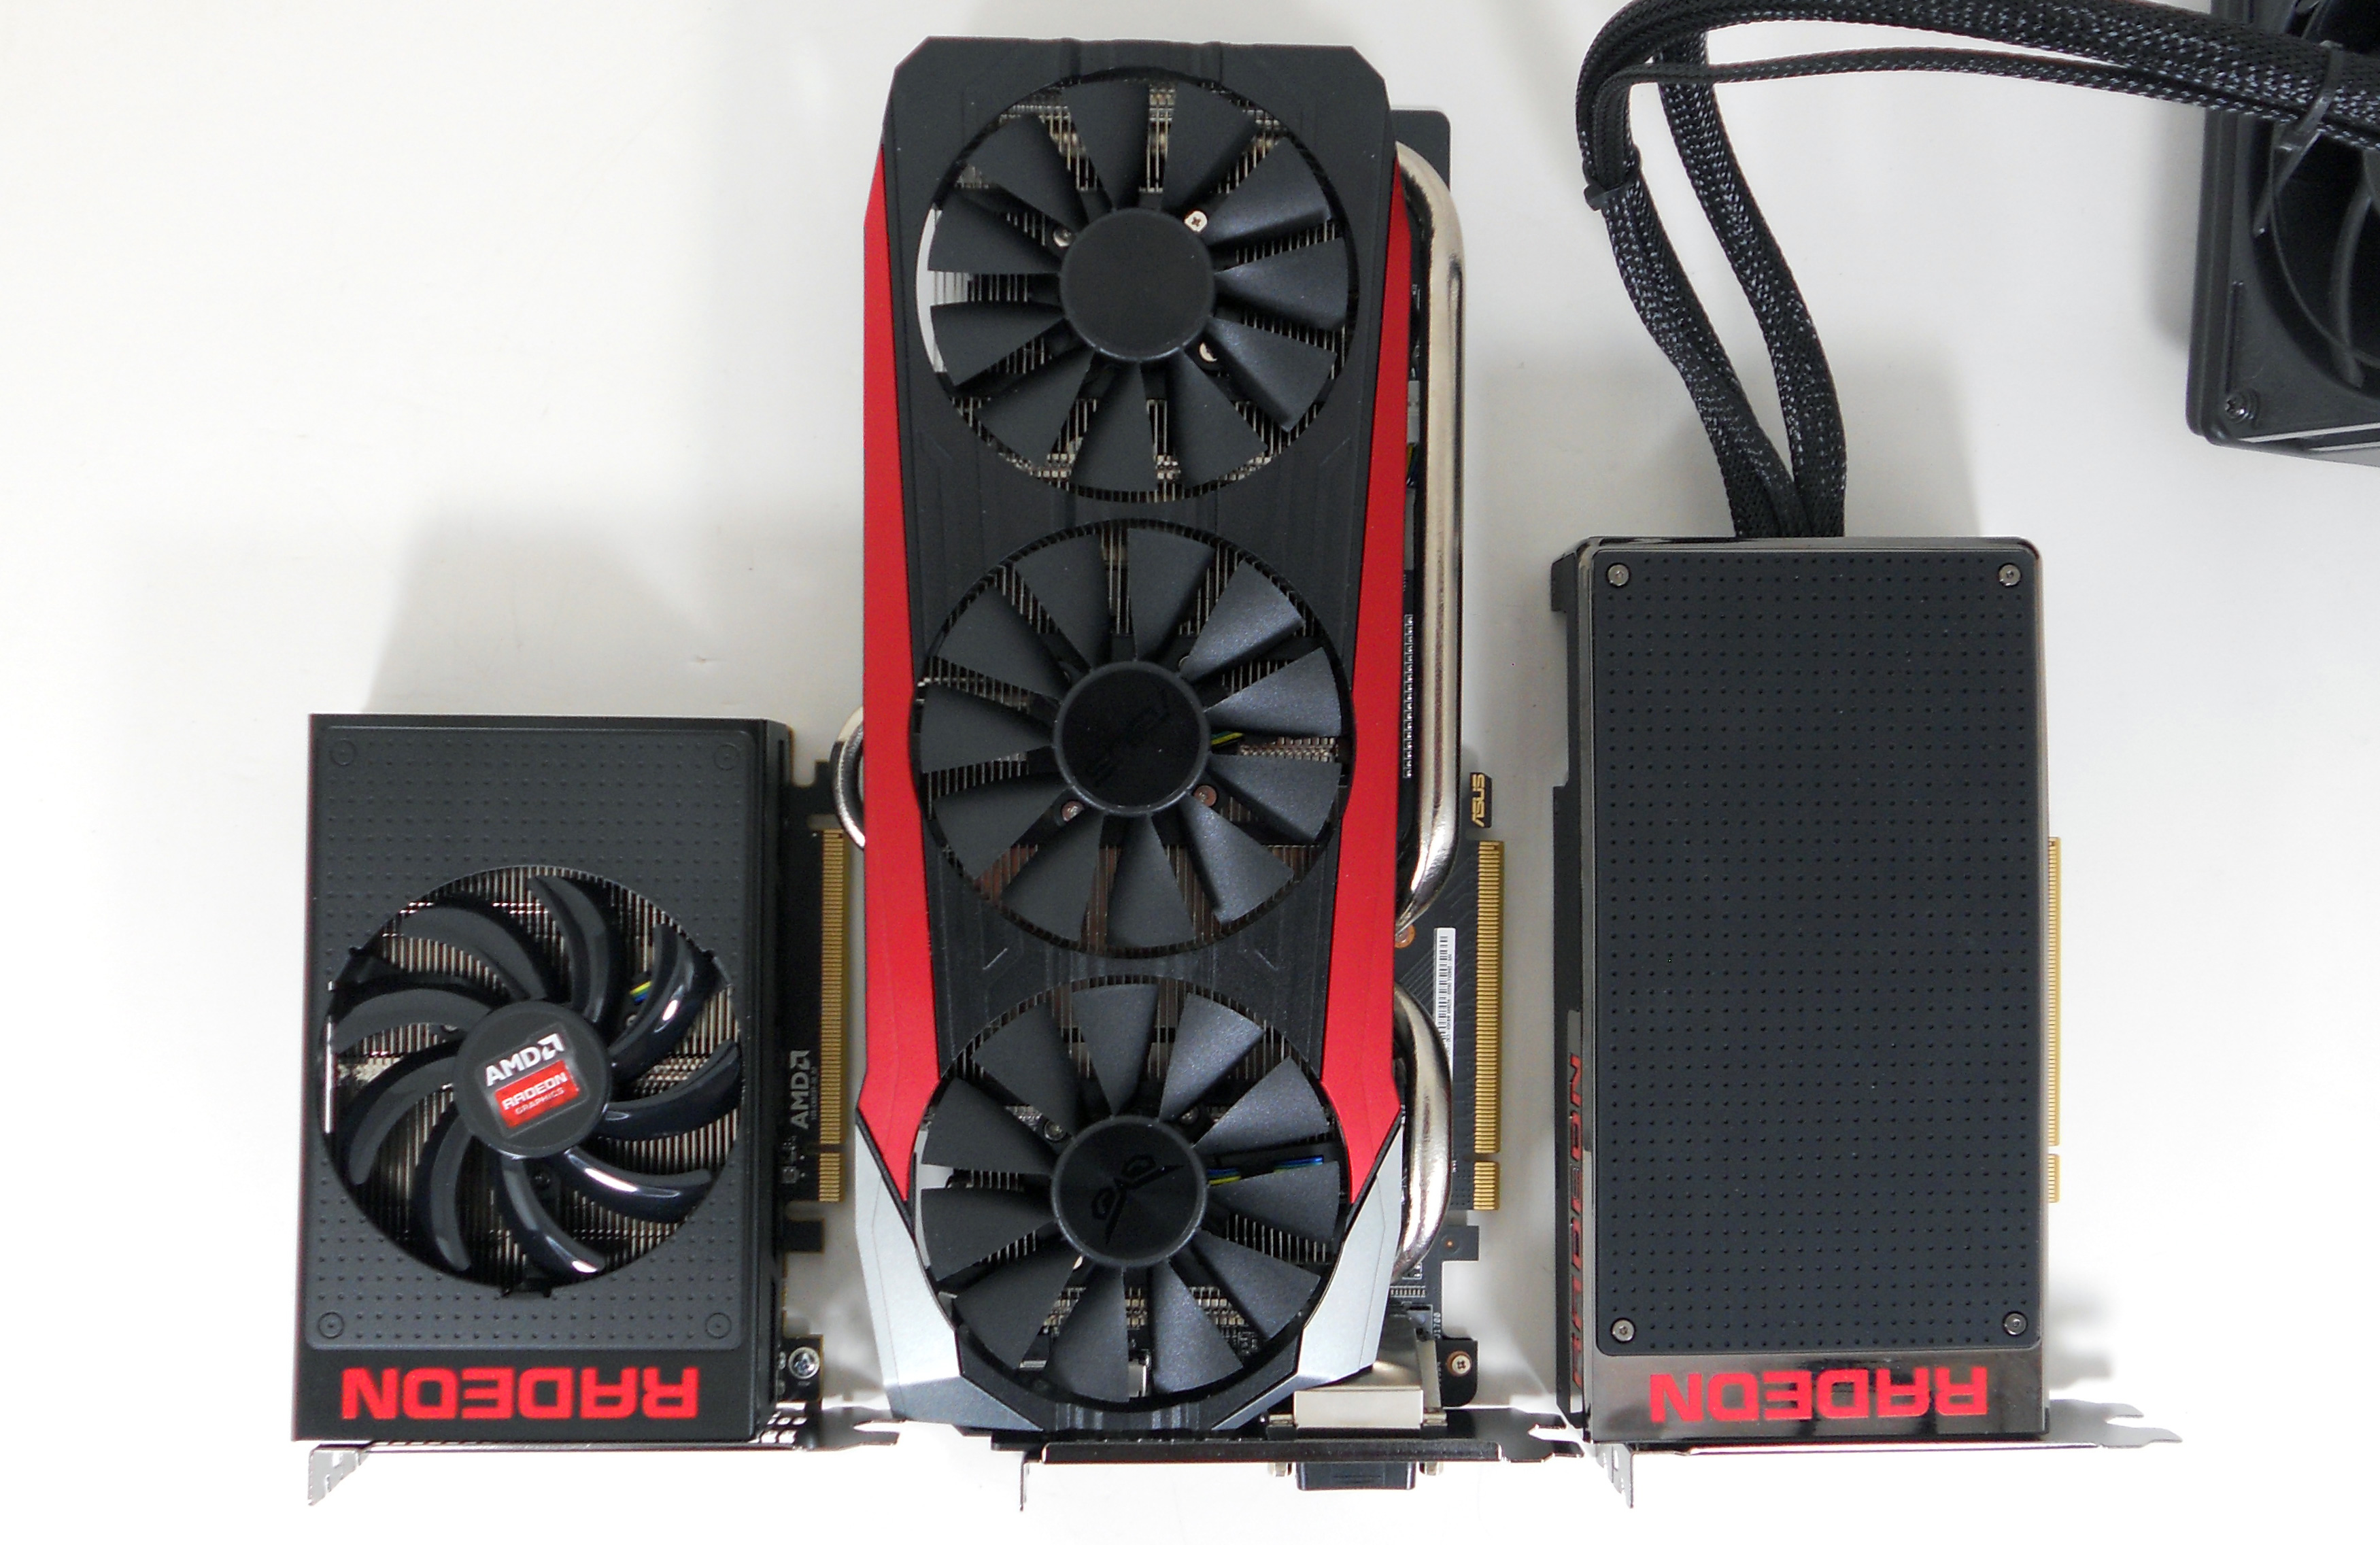 The AMD Radeon R9 Nano Review: The 